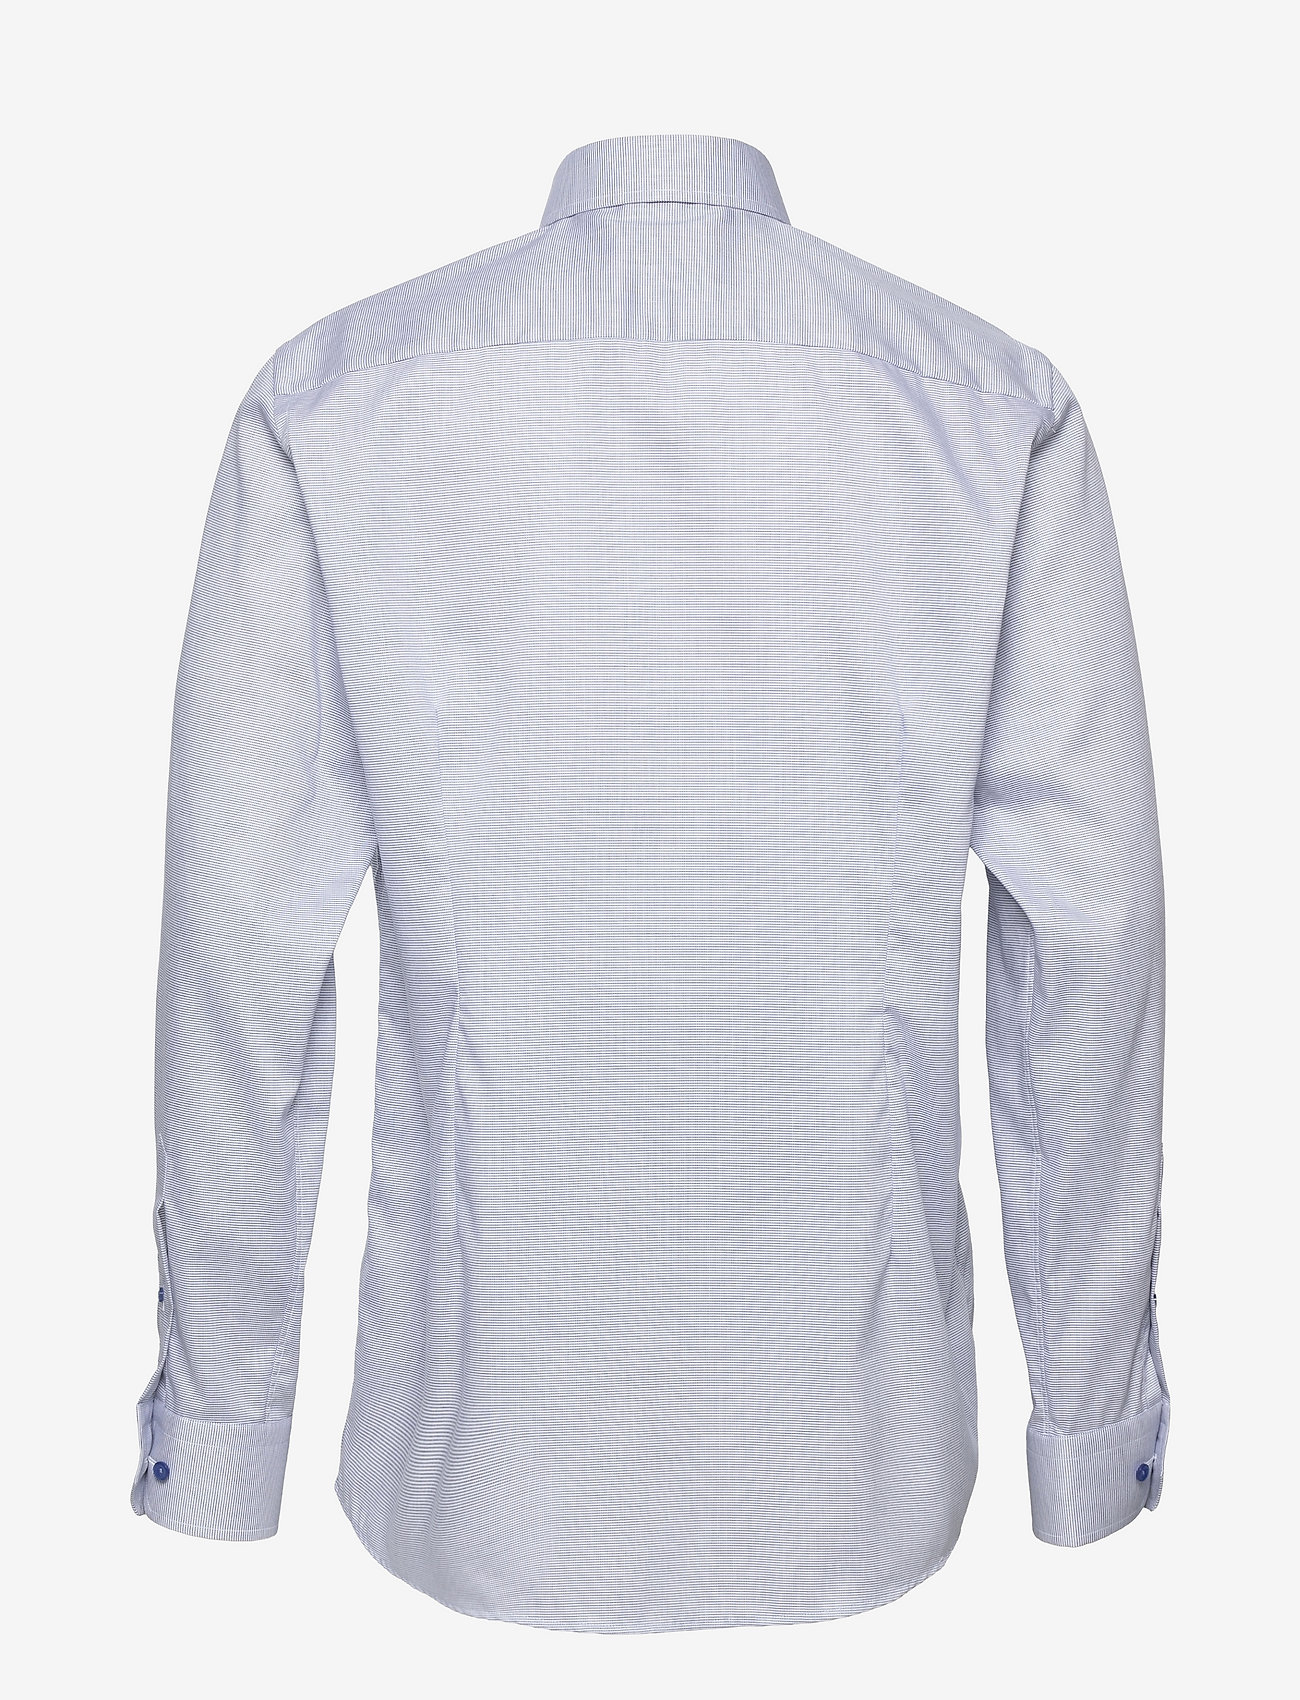 Eton - Men's shirt: Business  Twill - leinenhemden - mid blue - 1